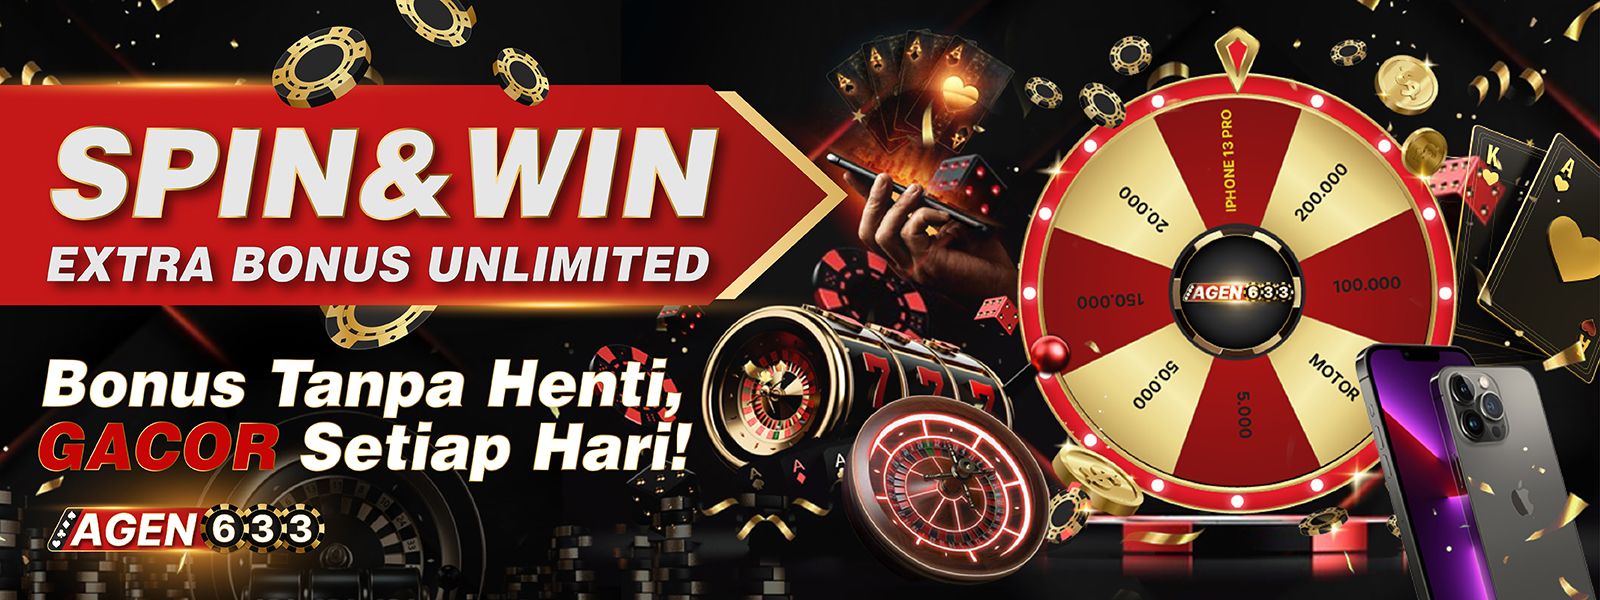 Spin & Win Extra Bonus Unlimited